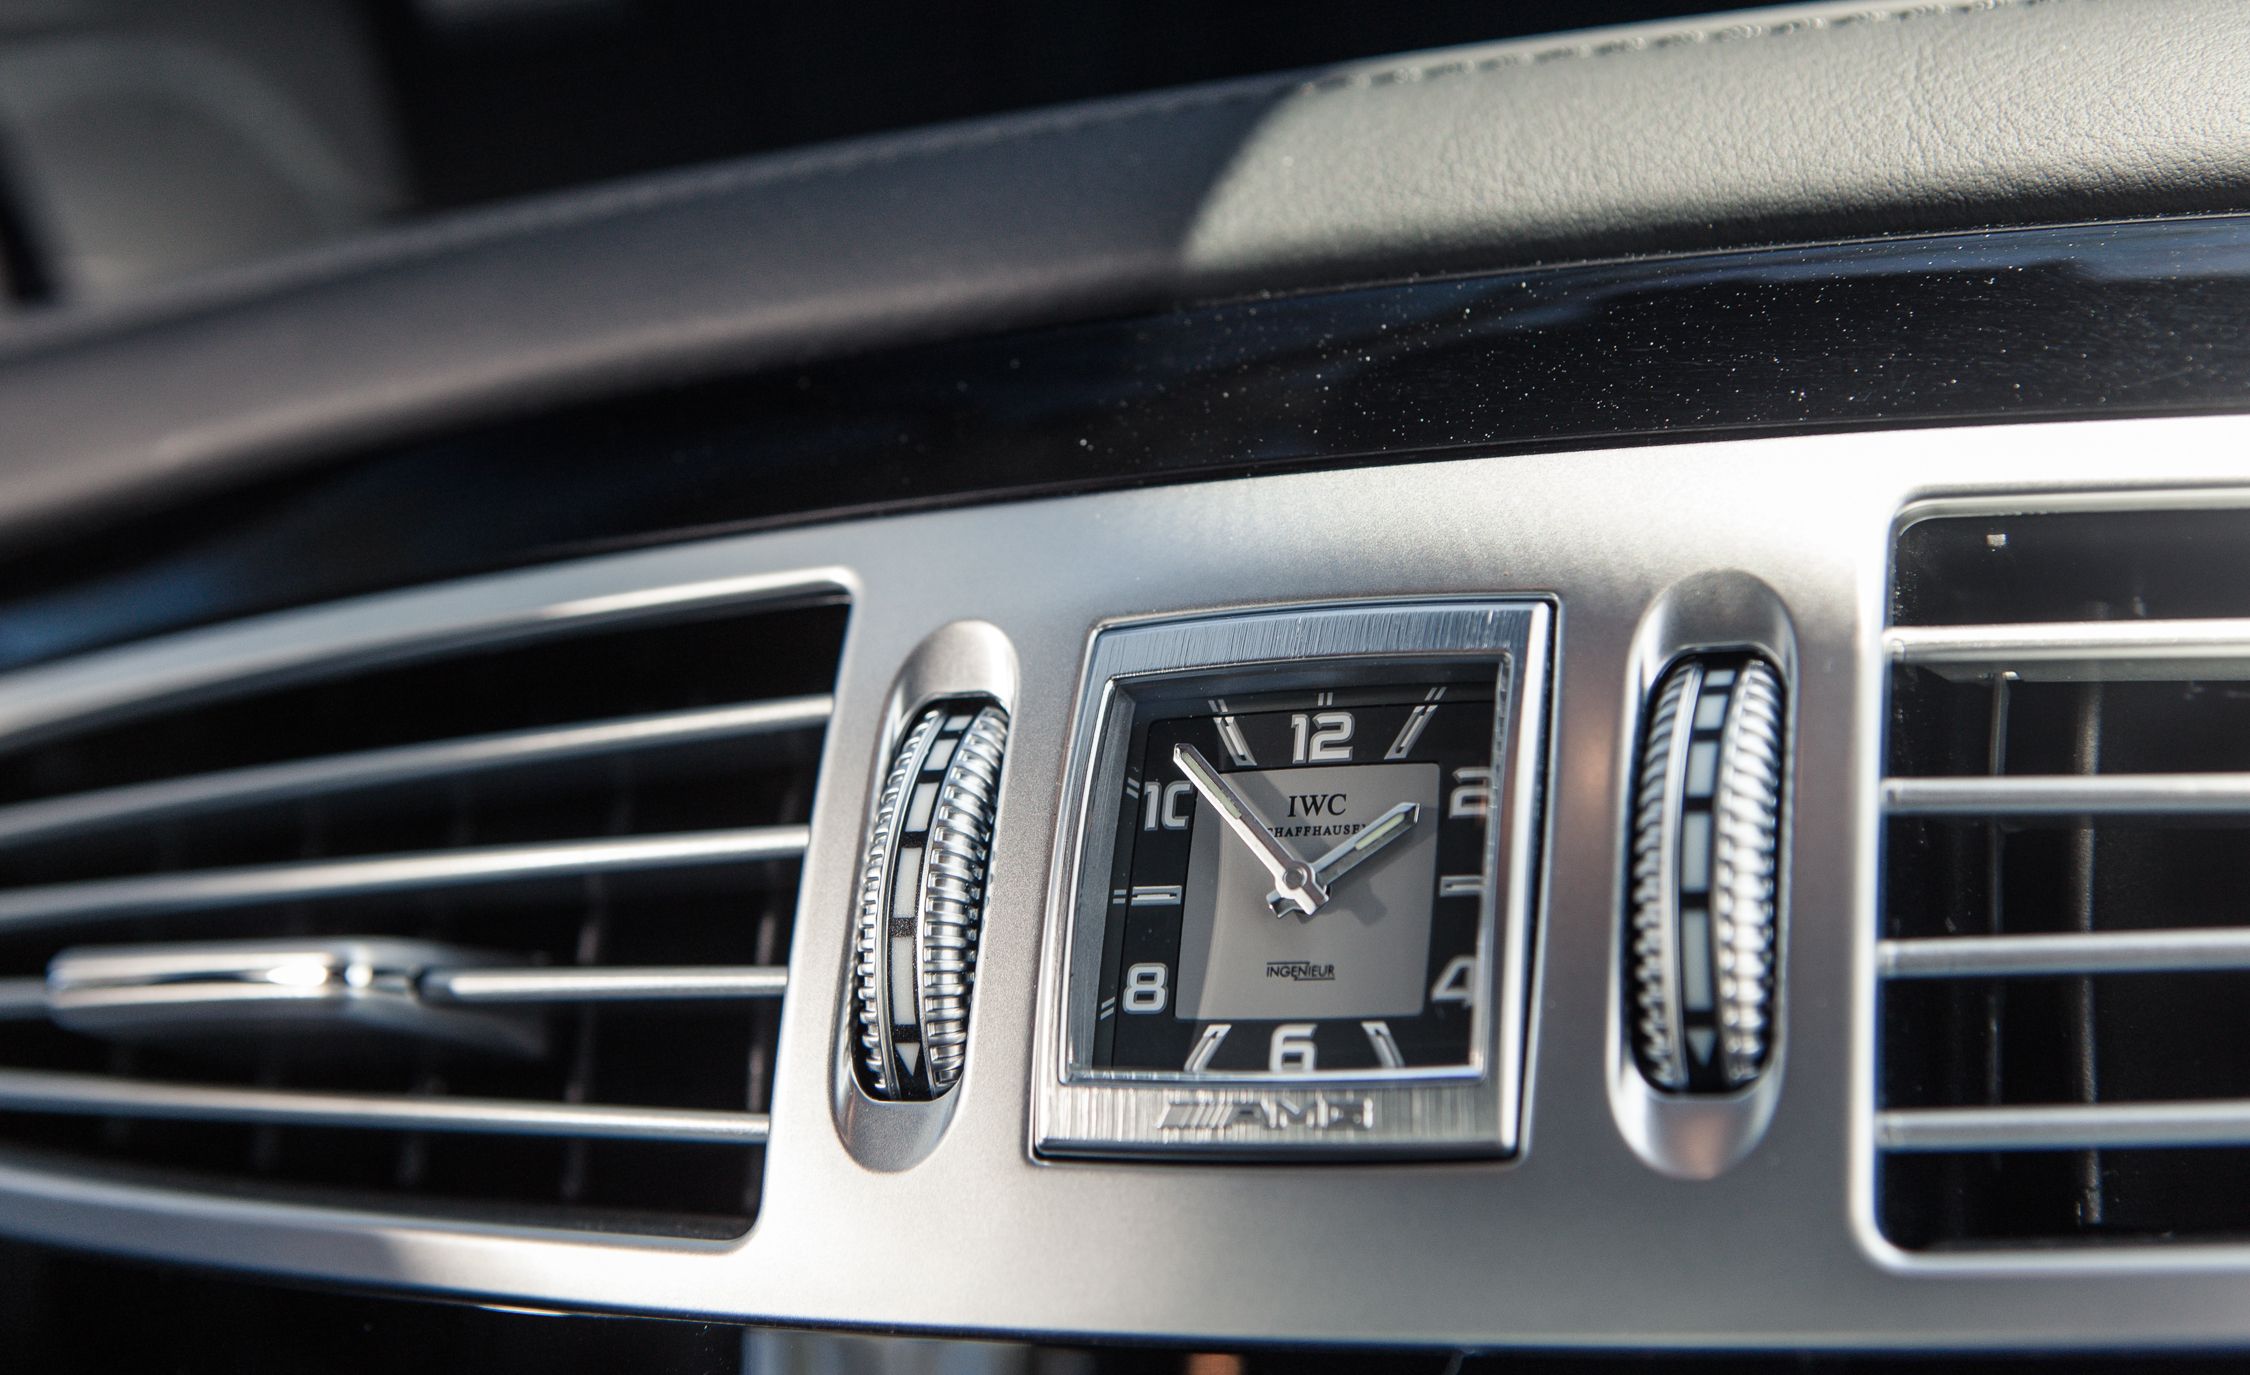 2013 Mercedes Benz CL65 AMG Interior Dashboard Clock (View 18 of 27)